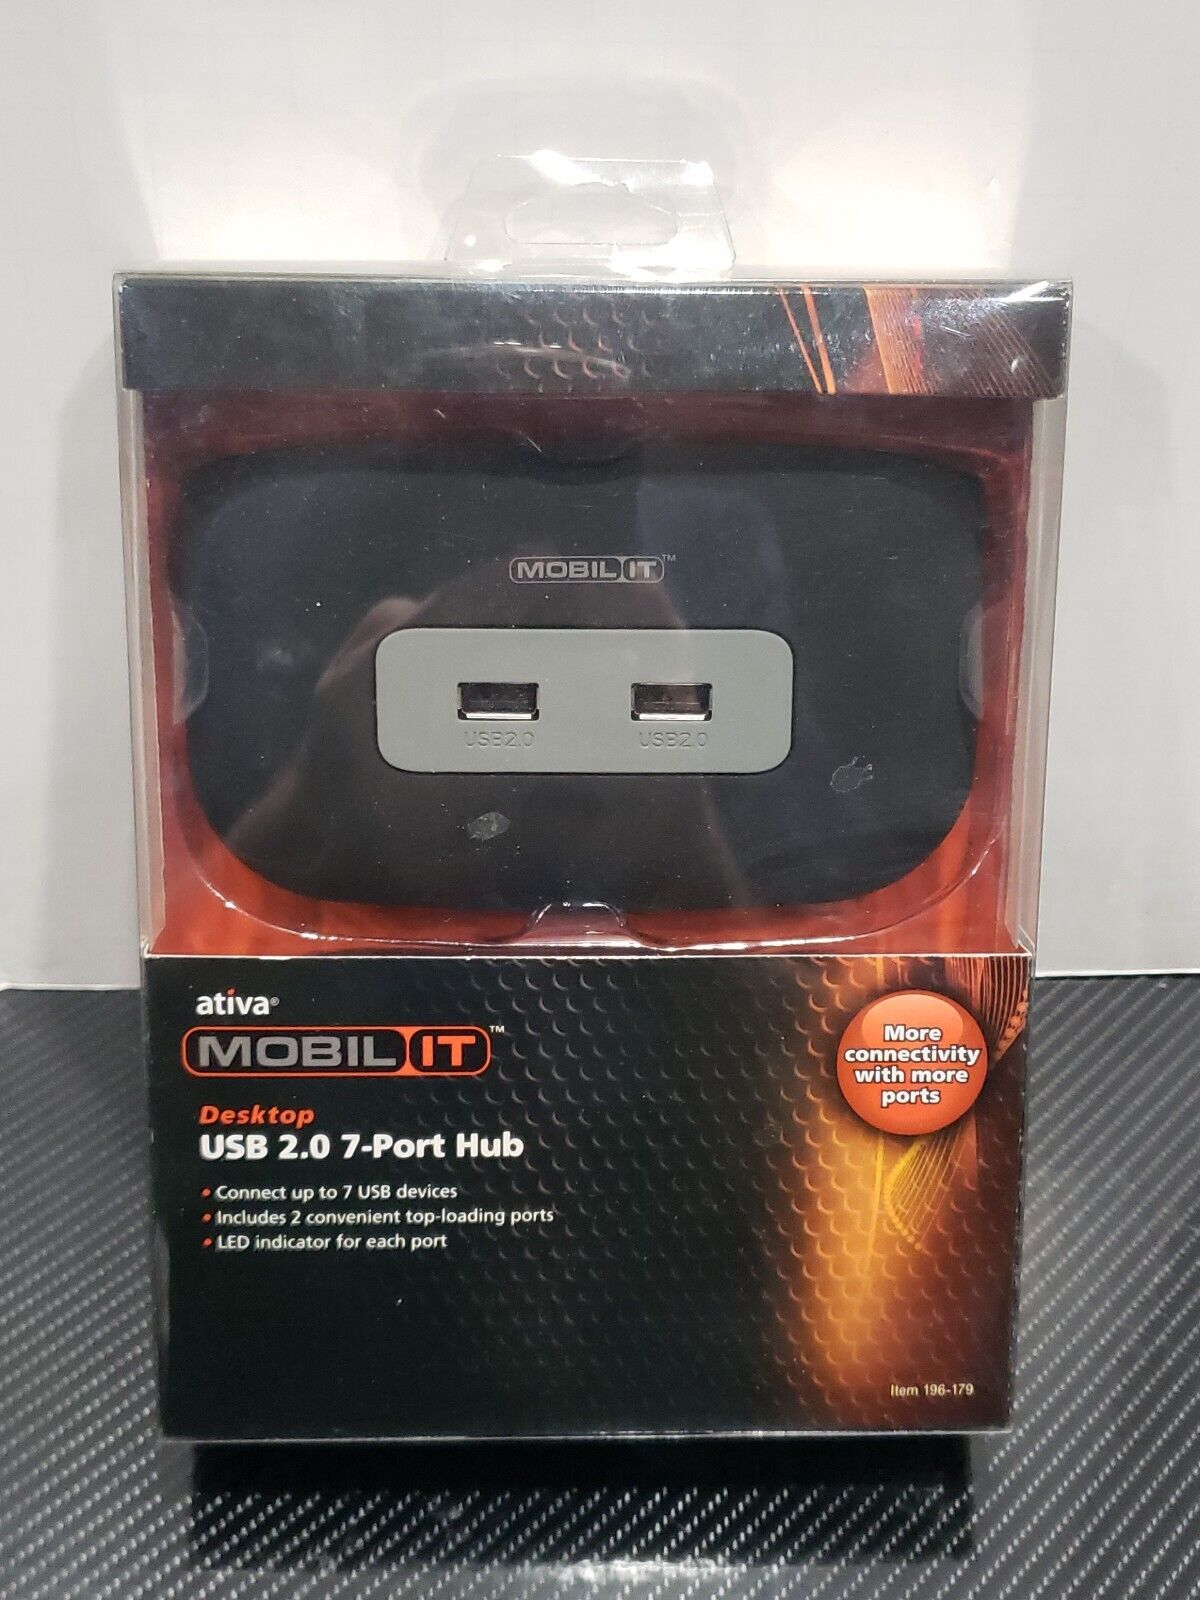 Brand New In Box Ativa Mobil-It Desktop USB 2.0 7-Port Hub Office Depot Brand